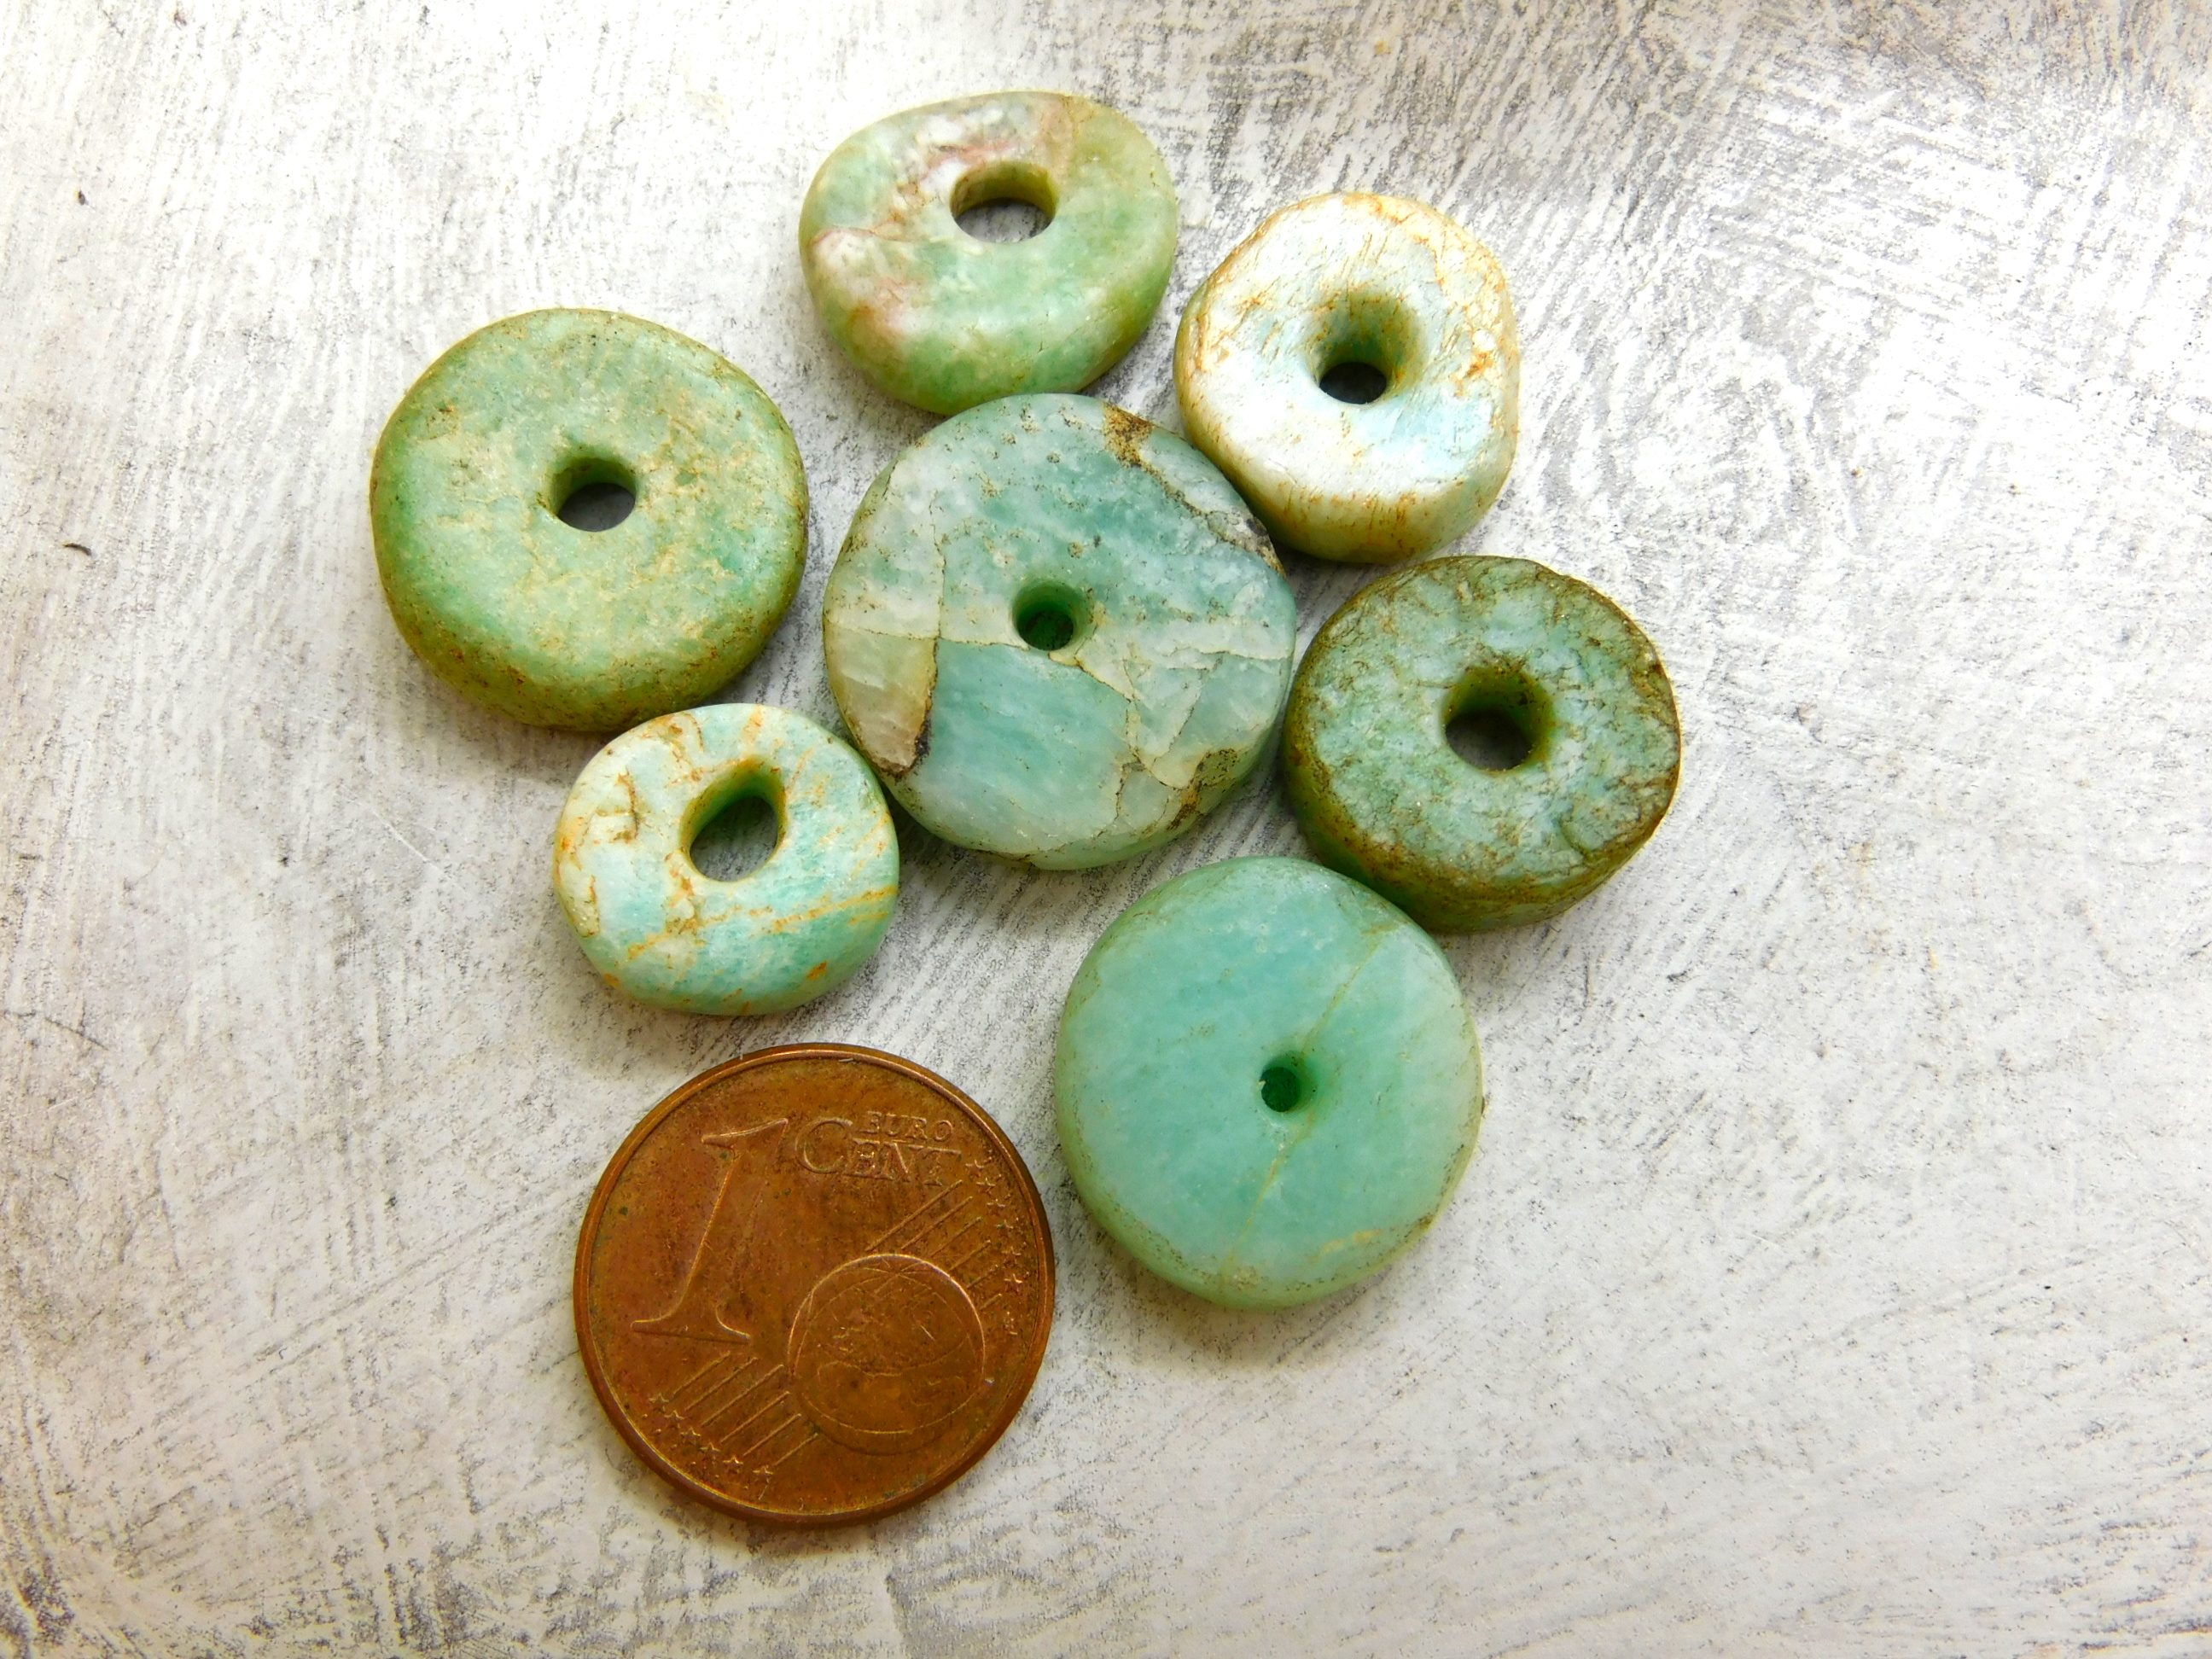 7 ancient Amazonite disc beads from Mauritania - rare Sahara stone